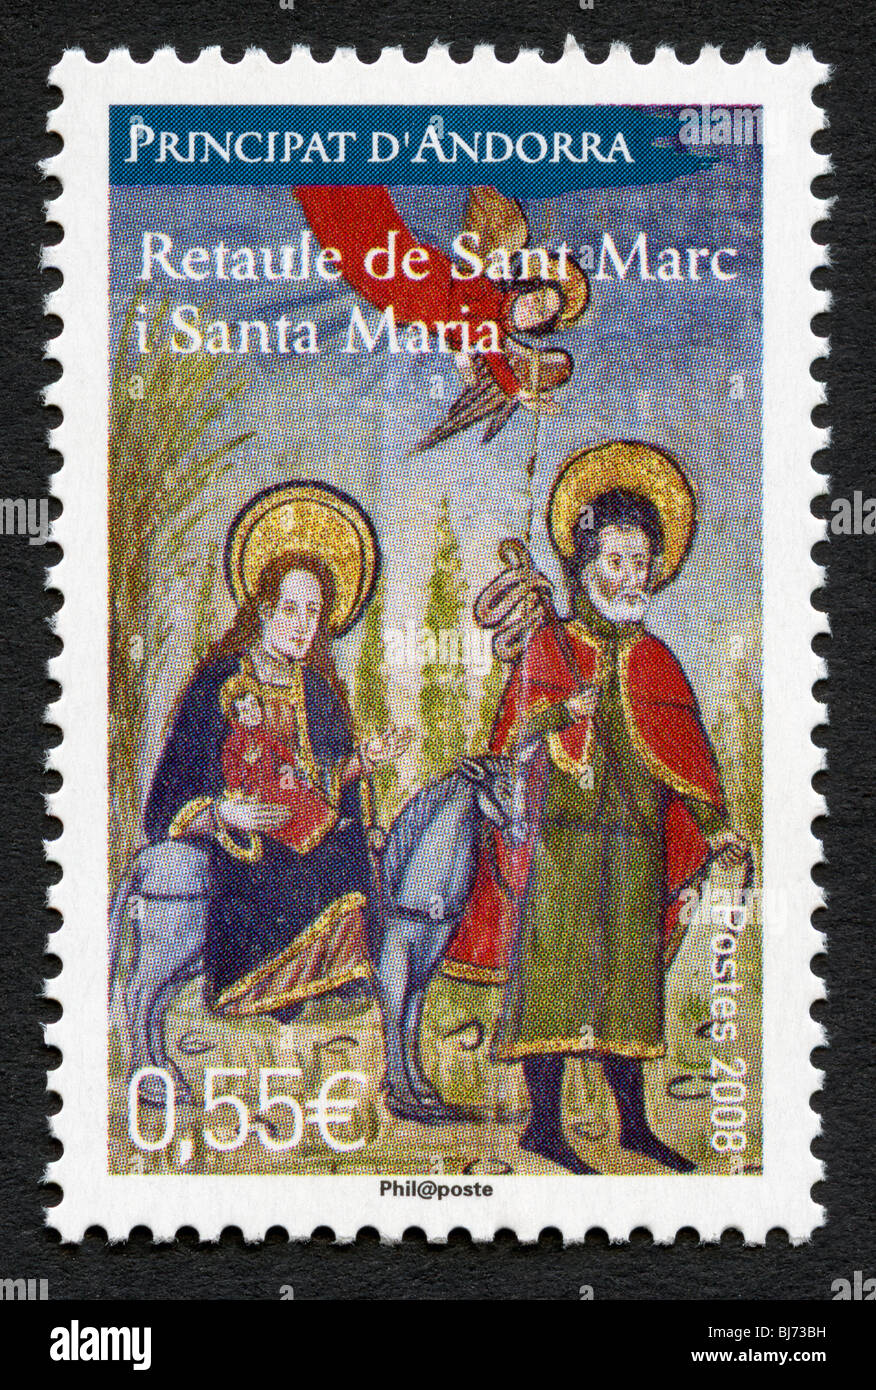 Andorra postage stamp Stock Photo